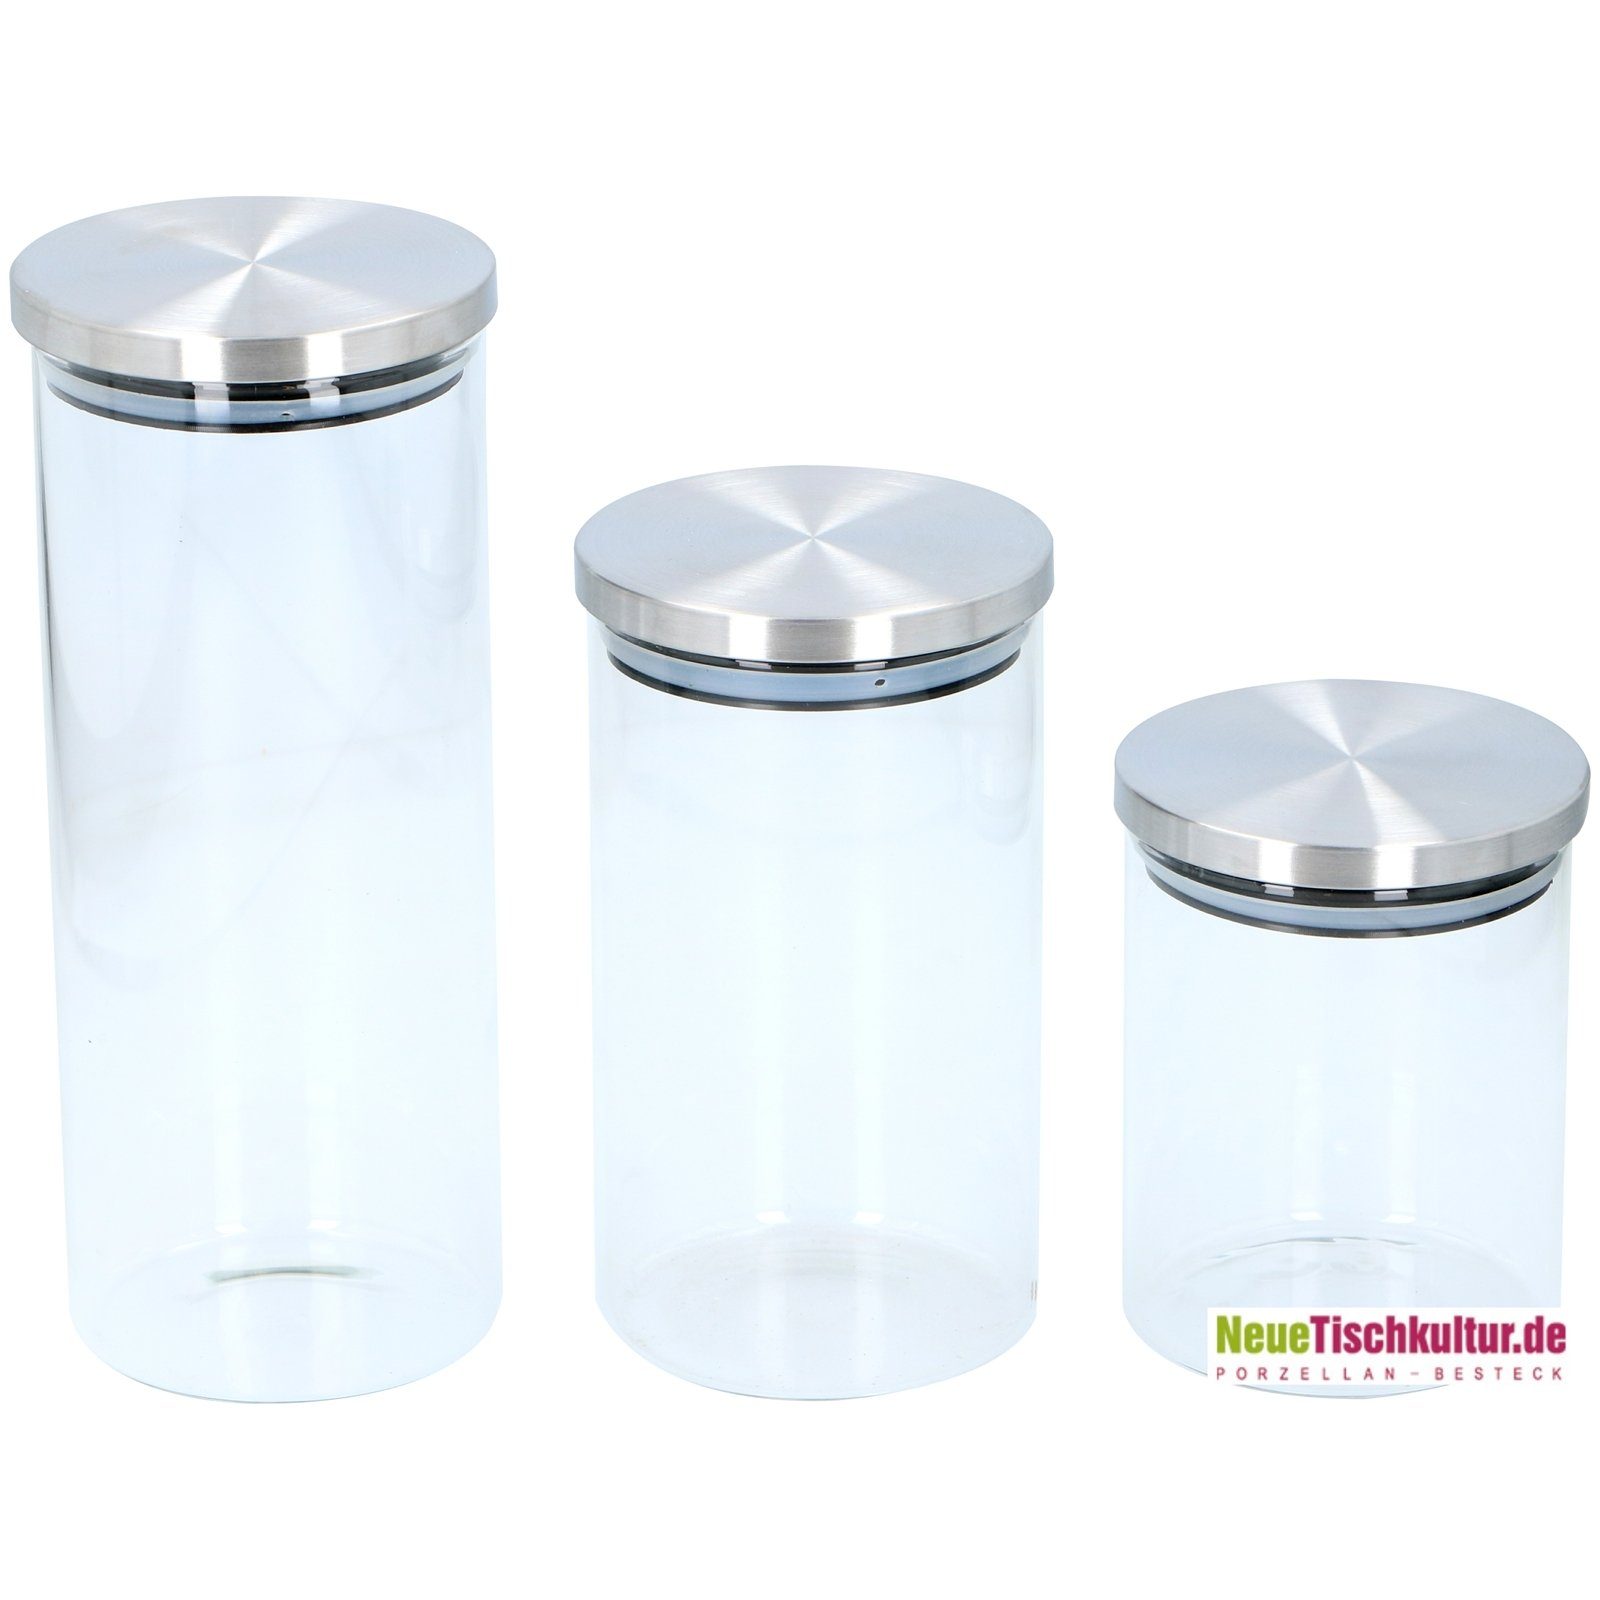 Vorratsgläser Neuetischkultur Edelstahl, (3-tlg) Glas, 3-teilig, Set Vorratsglas